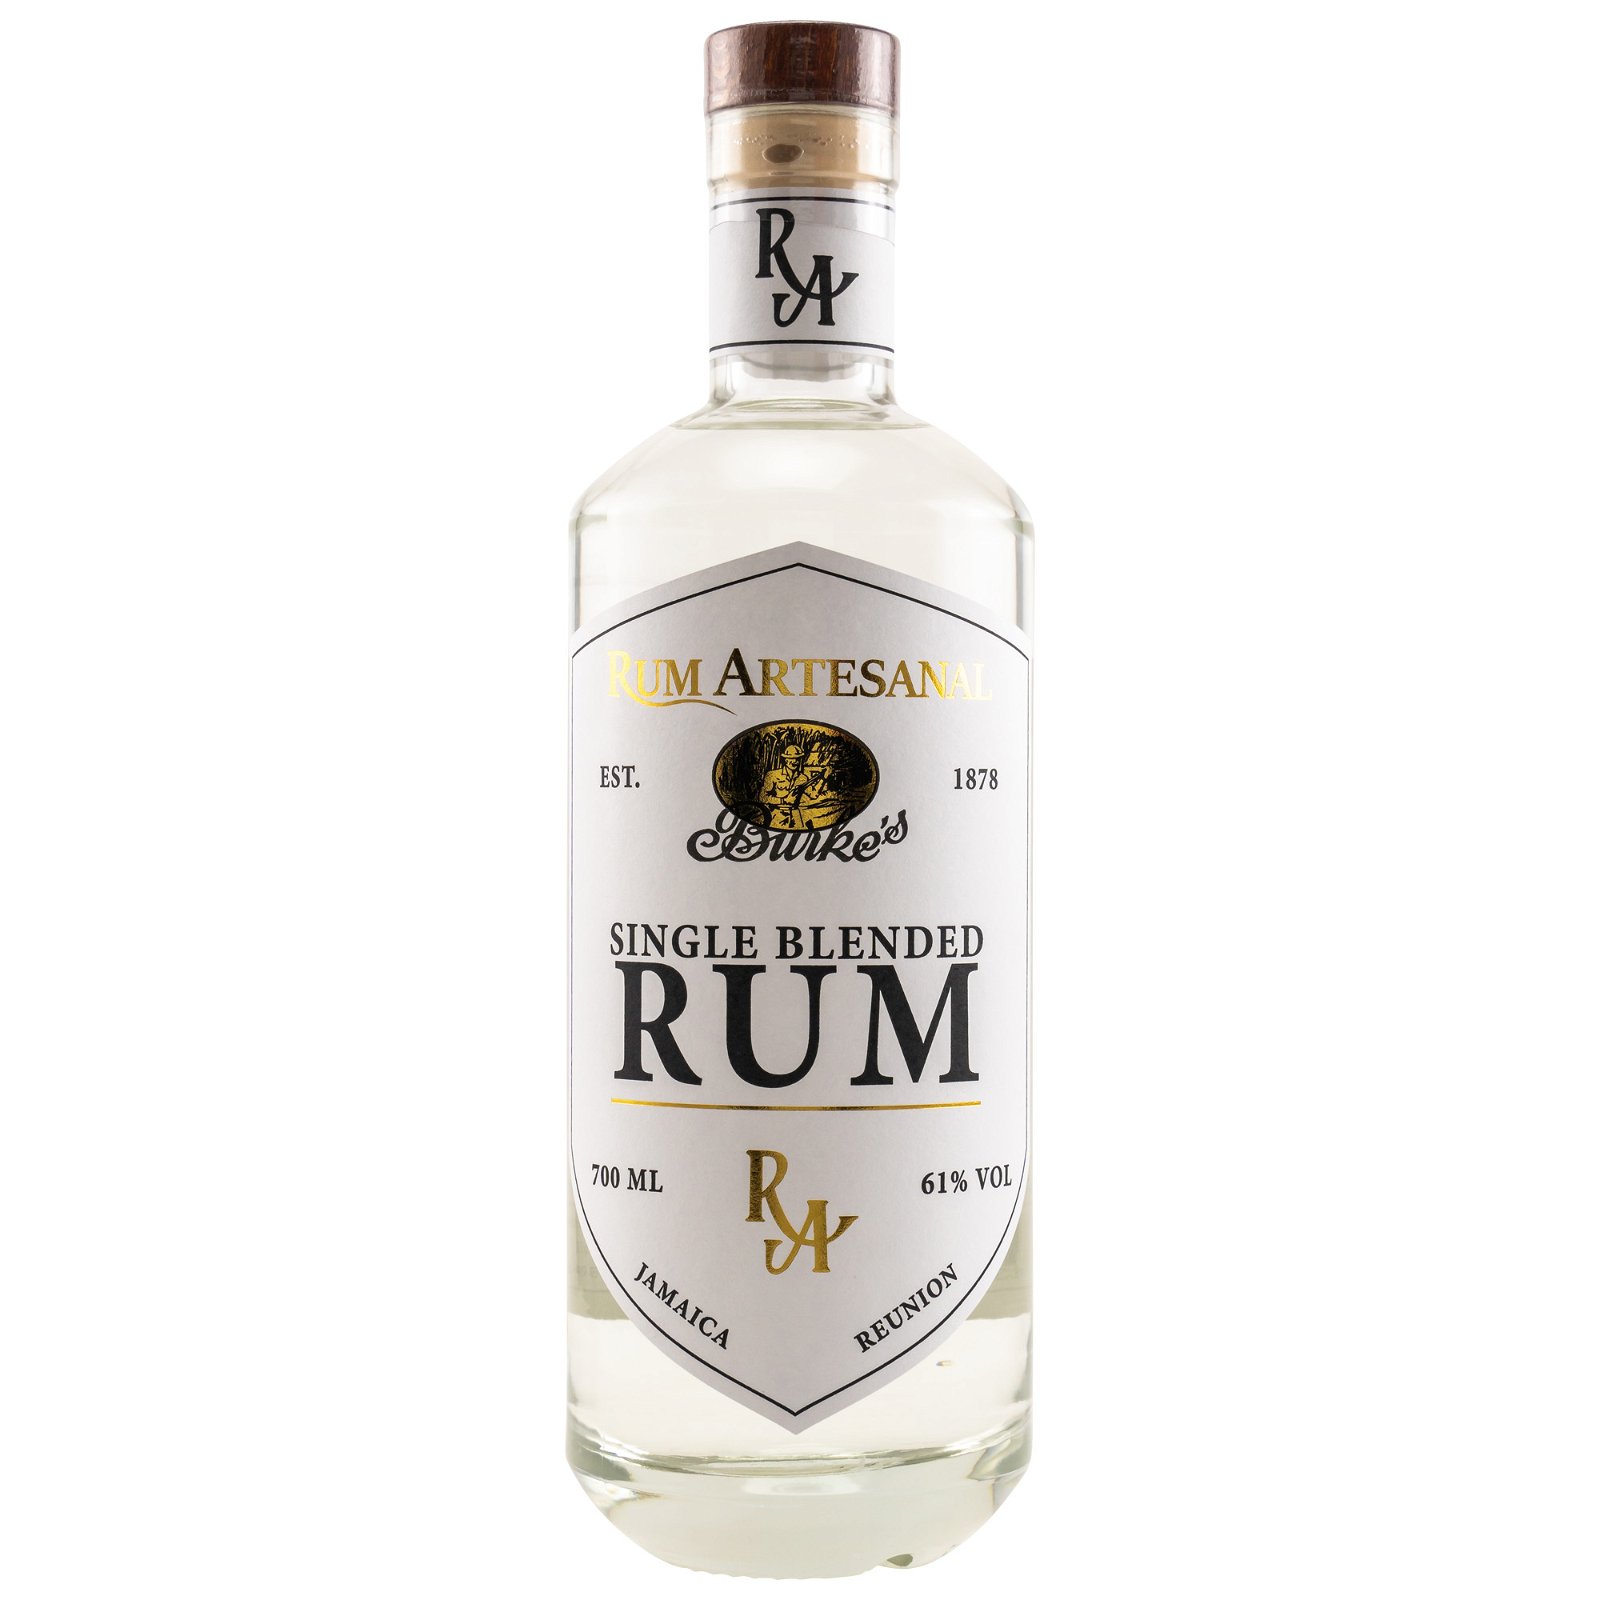 Jamaica La Reunion Single Blended Rum (Rum Artesanal)